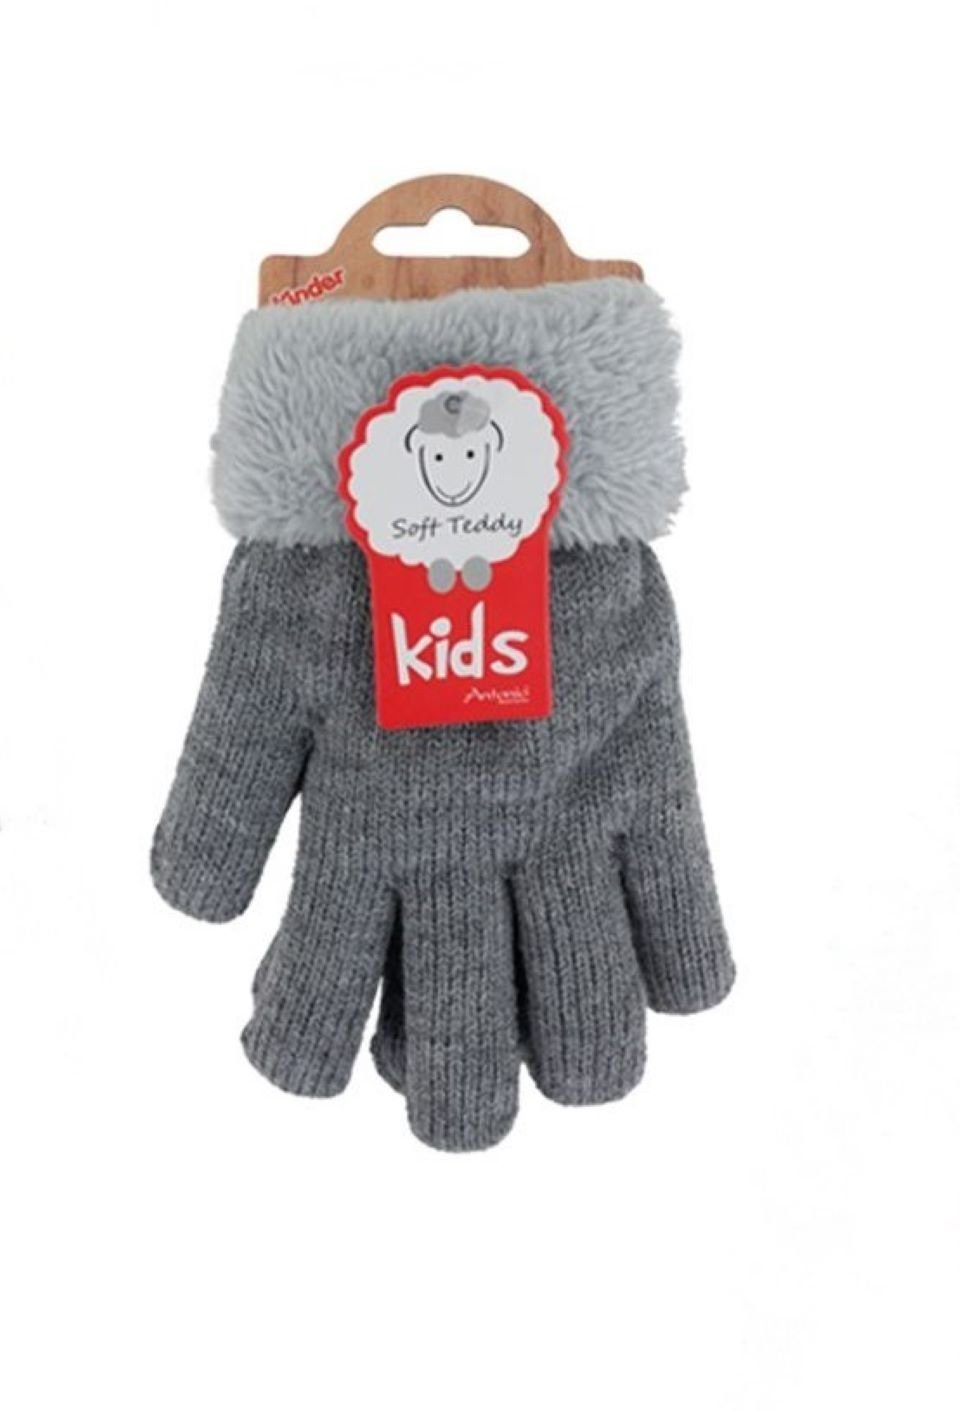 Antonio Strickhandschuhe Kinder Winter Füllung mit Soft Handschuhe, Handschuhe) Grau Kunstfell warme Innenfutter Teddy 2 Einzelne flauschig (Paar